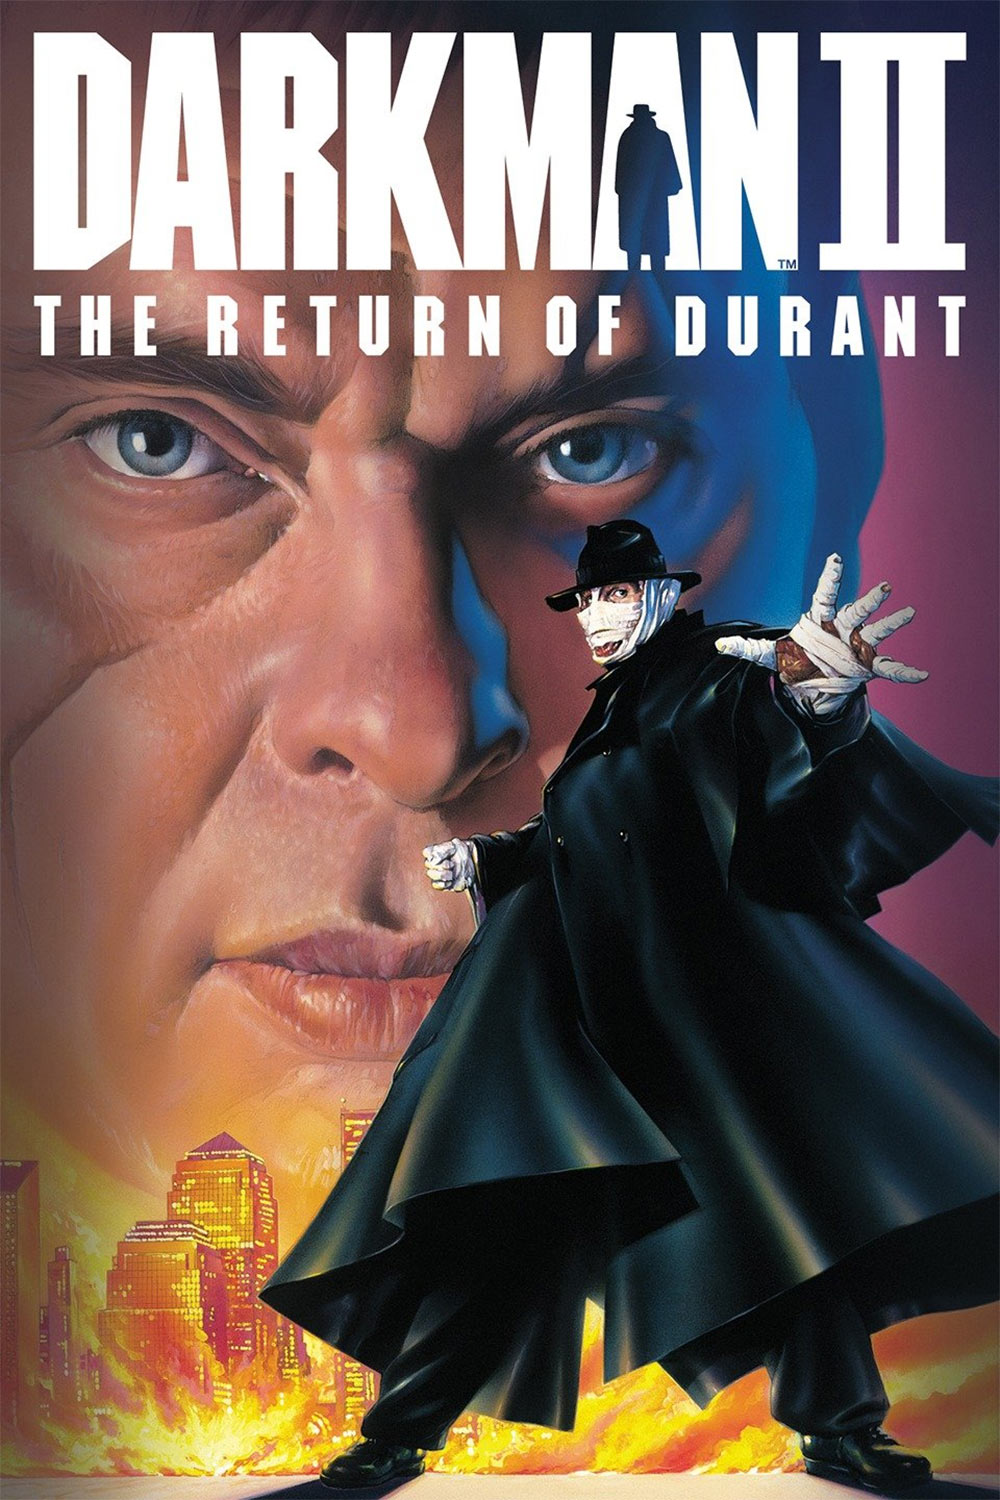 Darkman II: The Return of Durant Poster